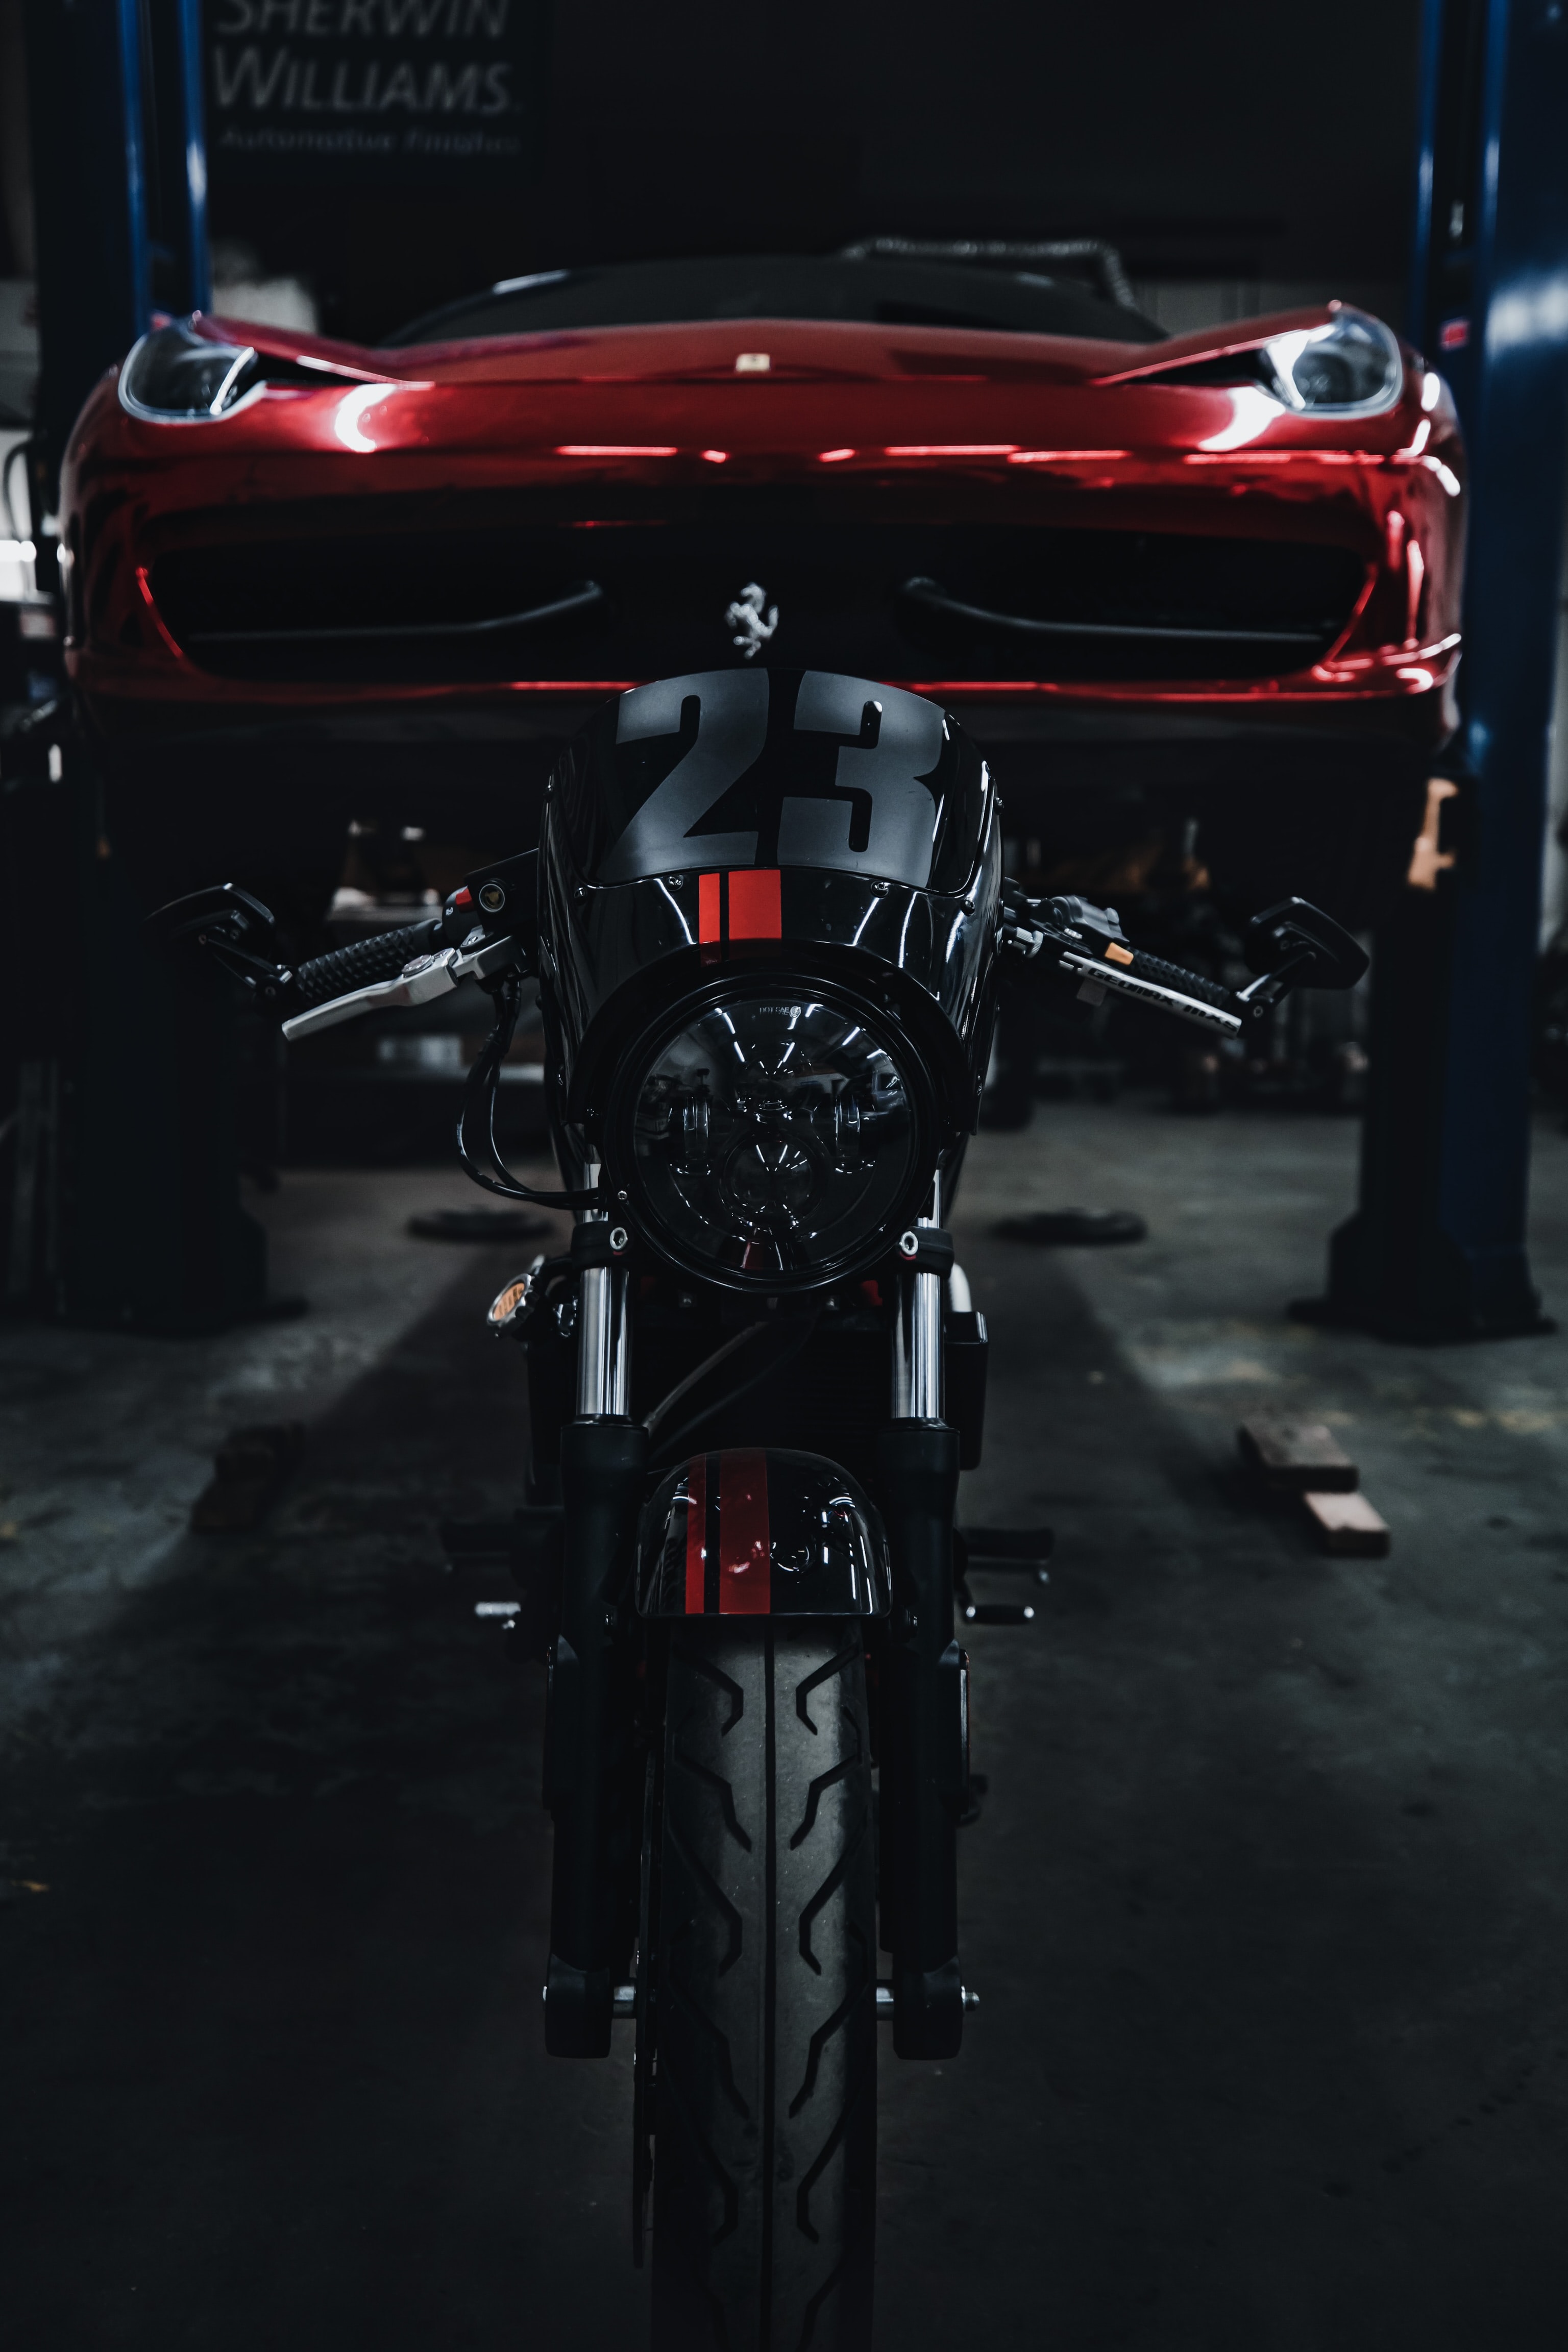 New Lock Screen Wallpapers bike, motorcycles, black, red, car, motorcycle